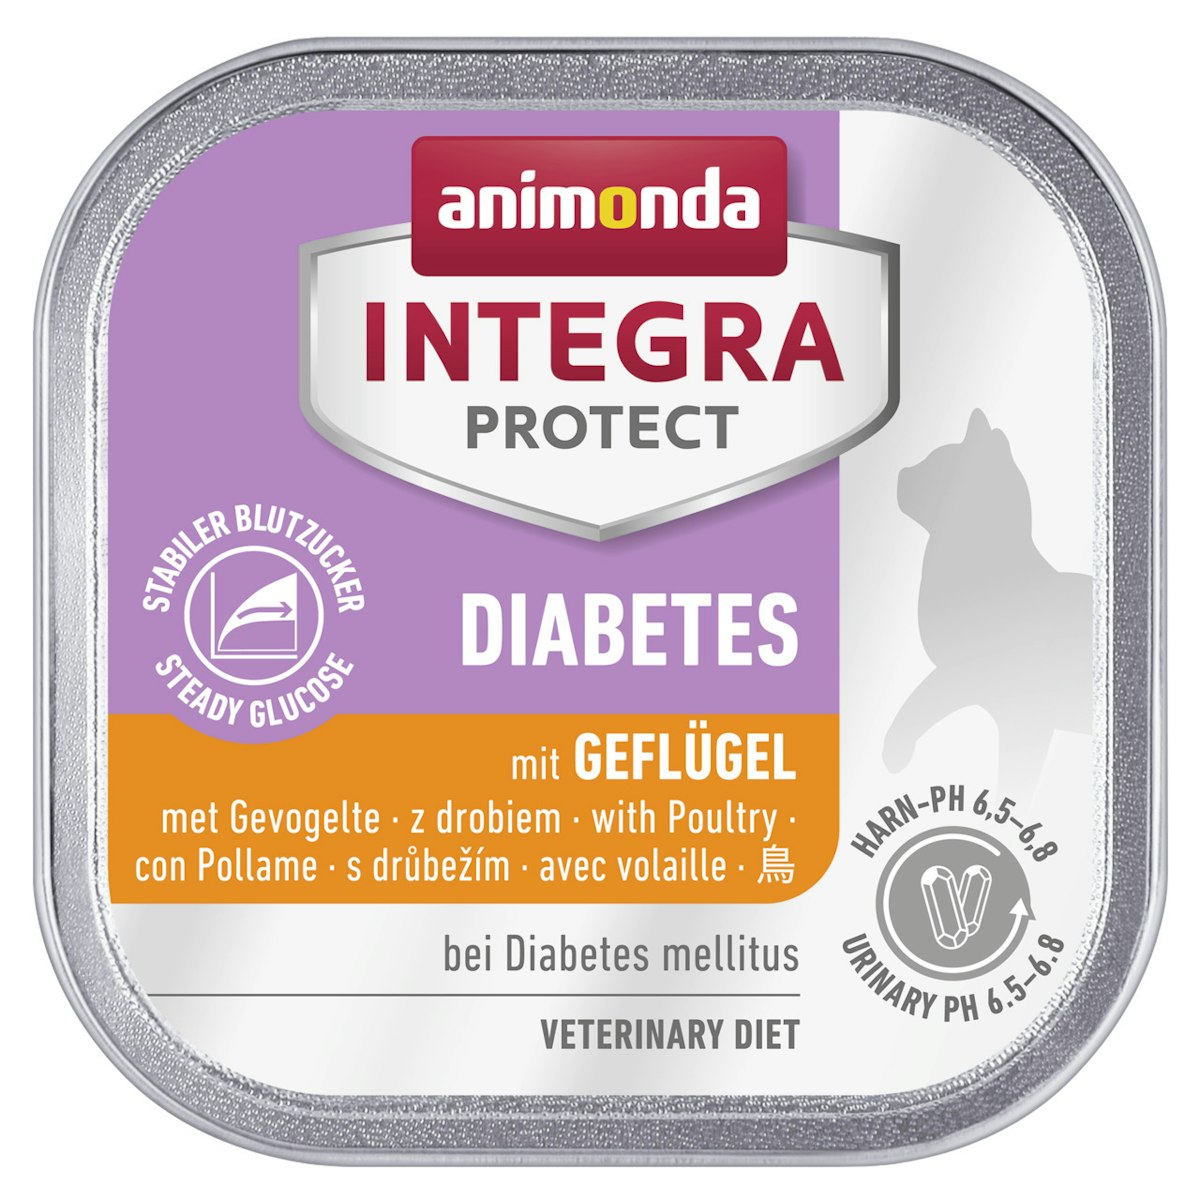 animonda Integra Protect Diabetes 100g Schale Katzennassfutter Sparpaket 32 x 100 Gramm Geflügel